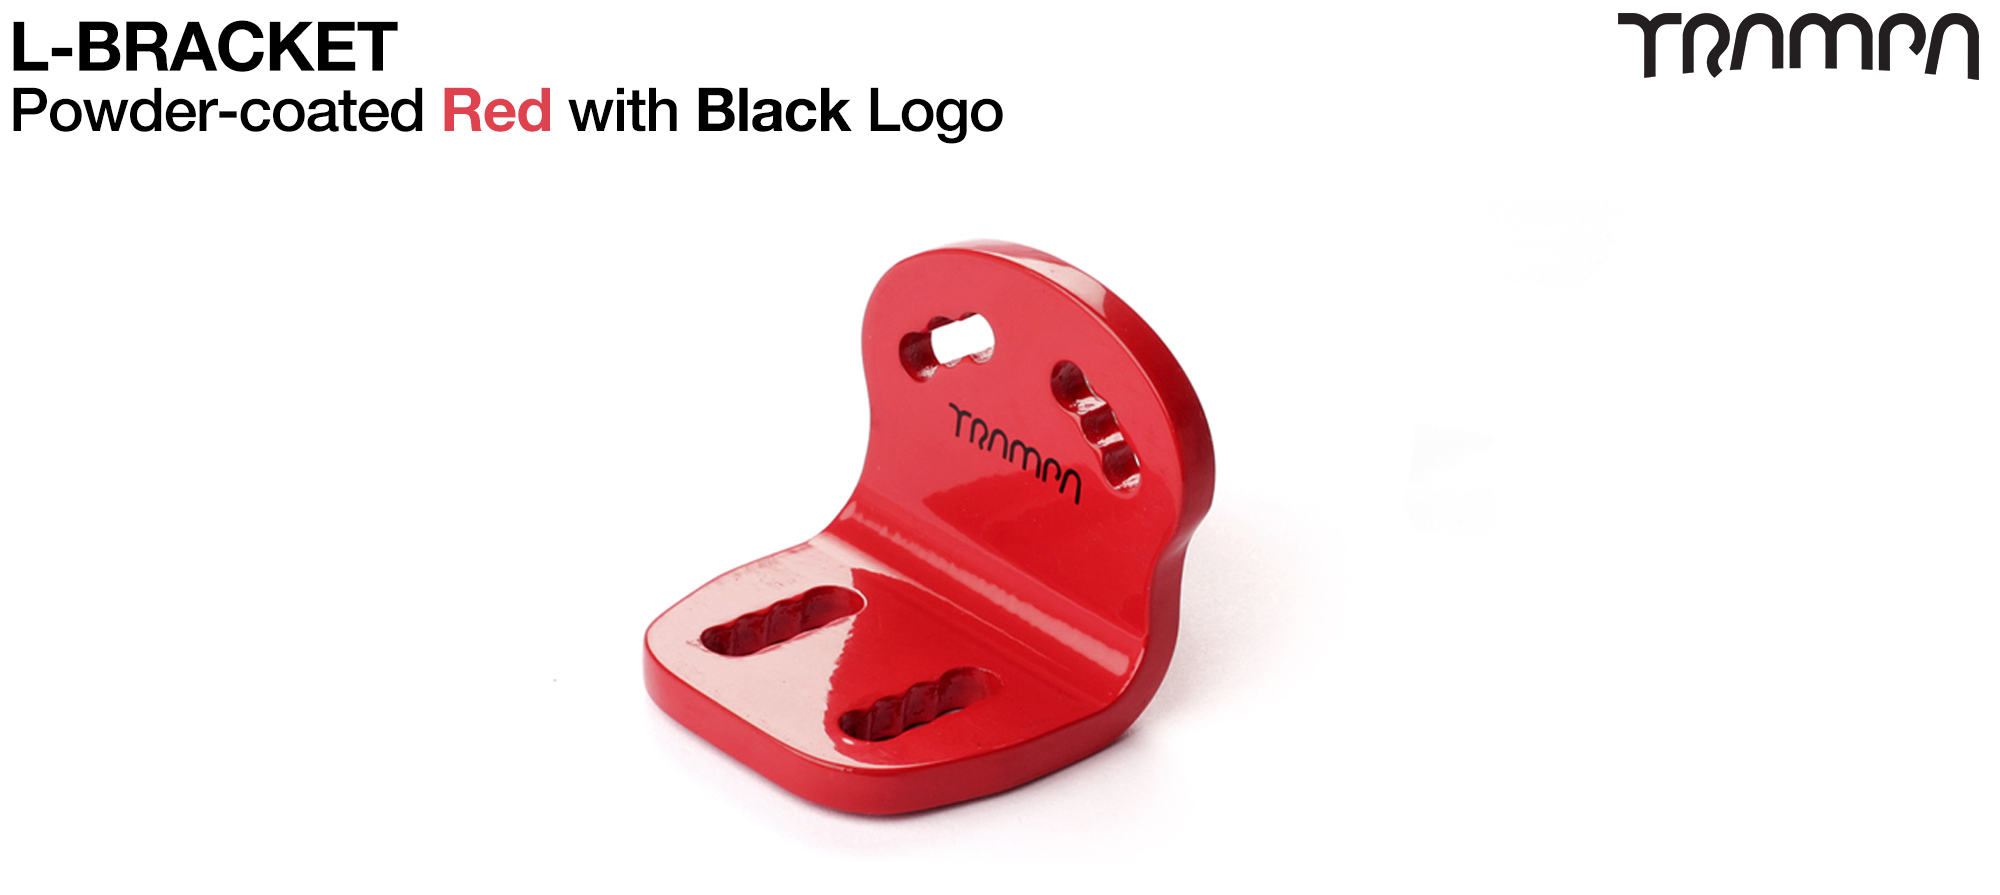 RED Powder-Coated with BLACK logo L-Bracket